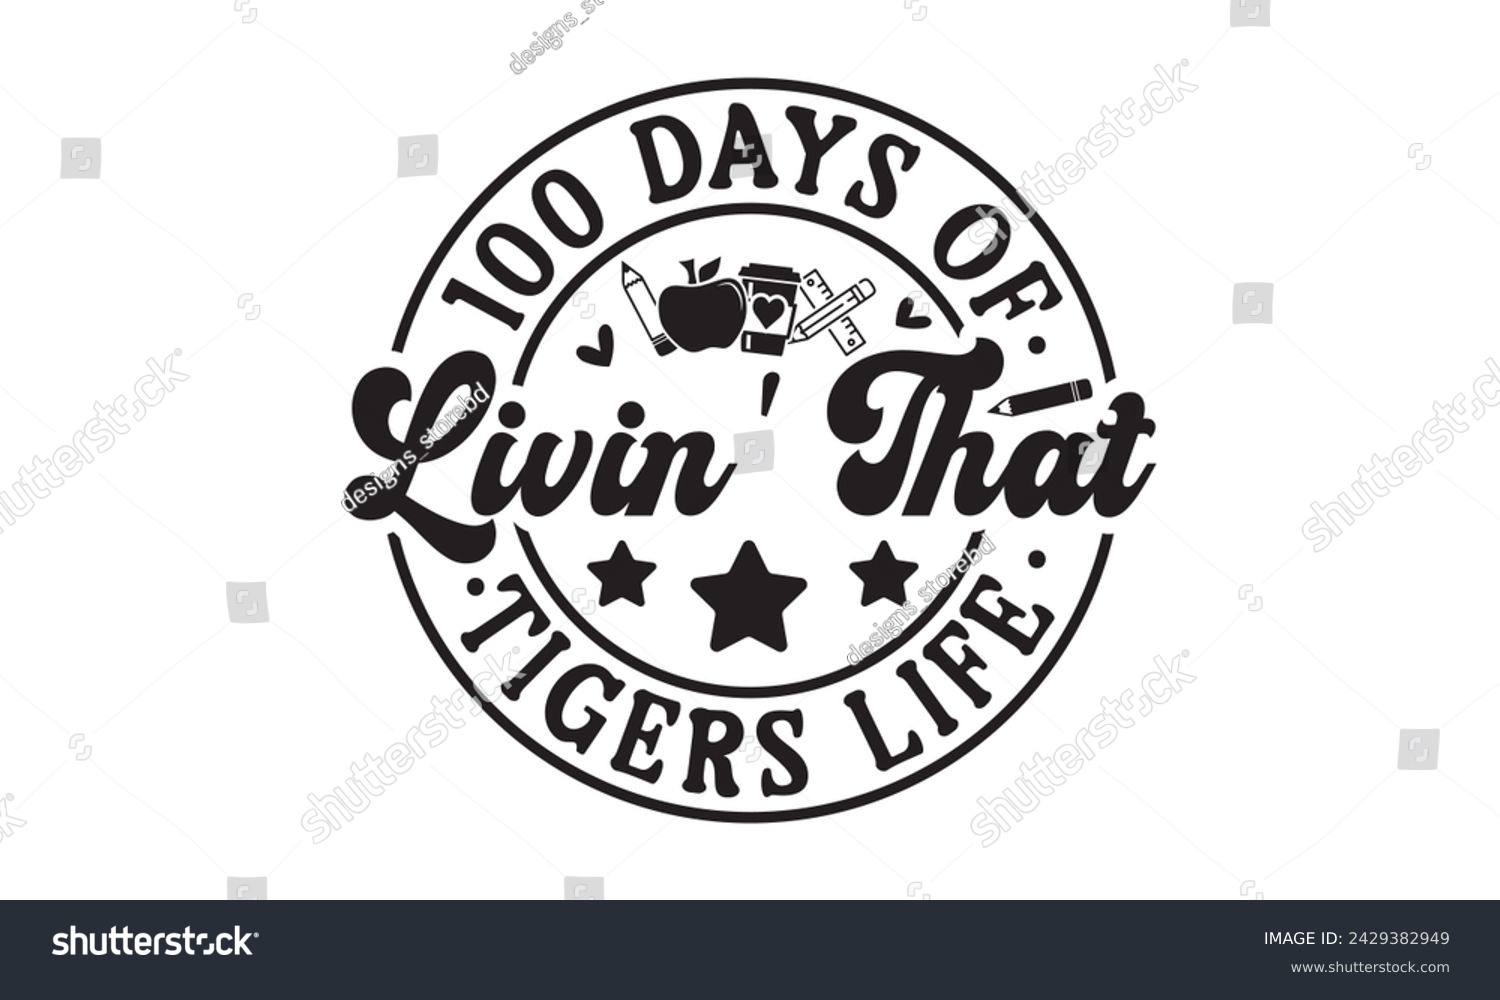 SVG of 100 days of livin' that tigers,100 Days of school svg,Teacher svg,t-shirt design,Retro 100 Days svg,funny 100 Days Of School svg,Printable Vector Illustration,Cut Files Cricut,Silhouette,png,Laser cut svg